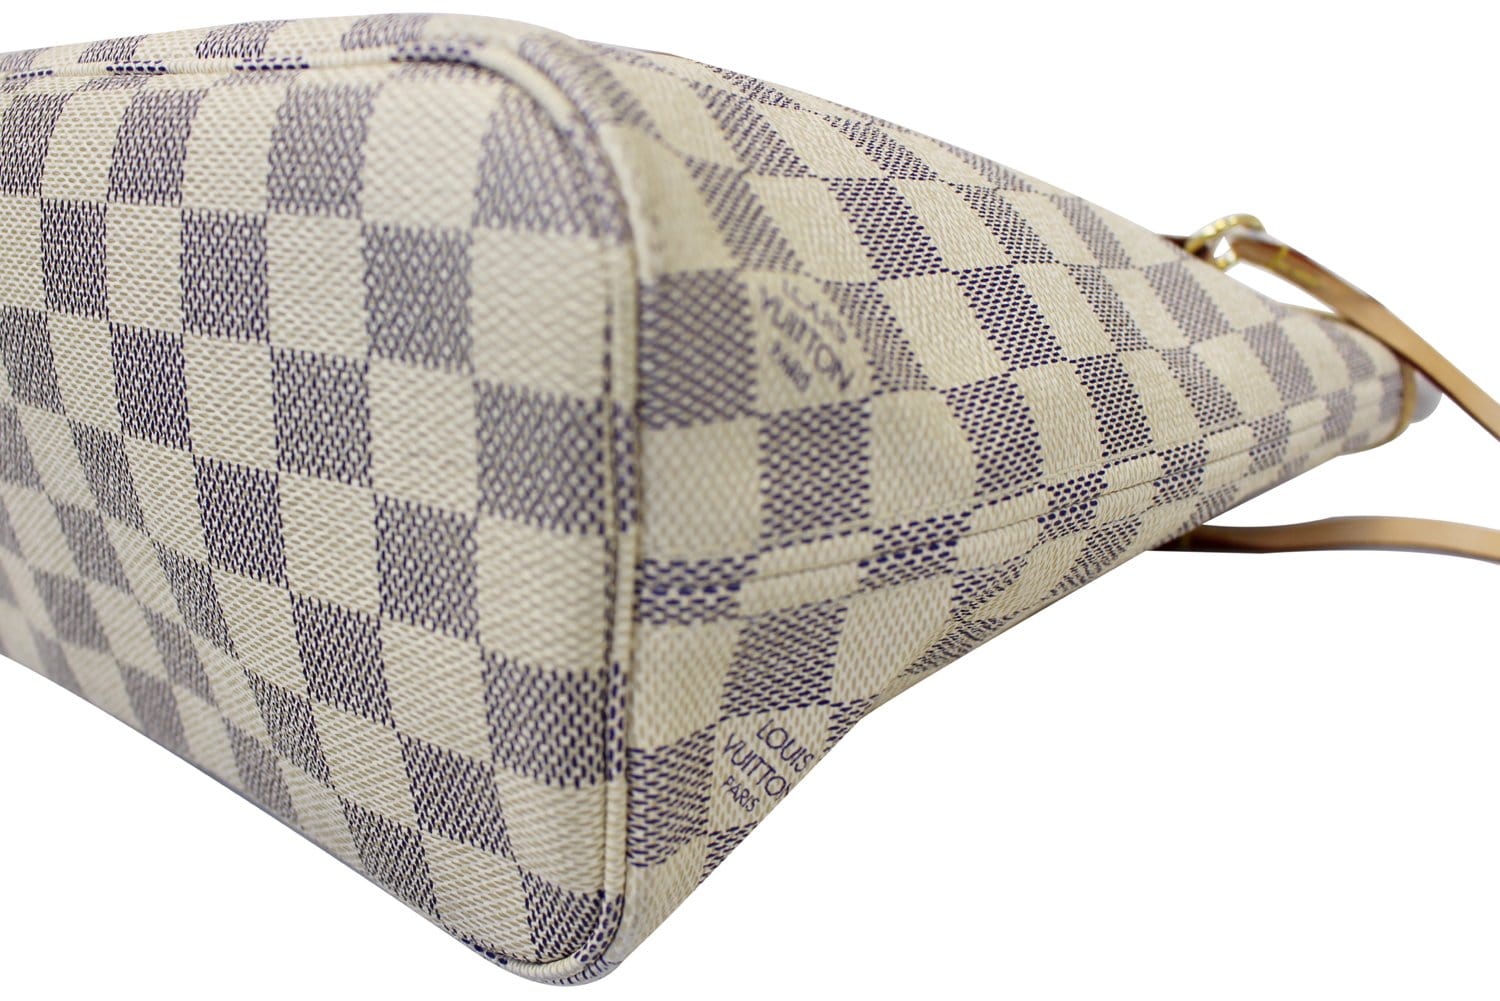 Louis Vuitton Damier Azur Neverfull PM Tote Bag Shoulder N51110